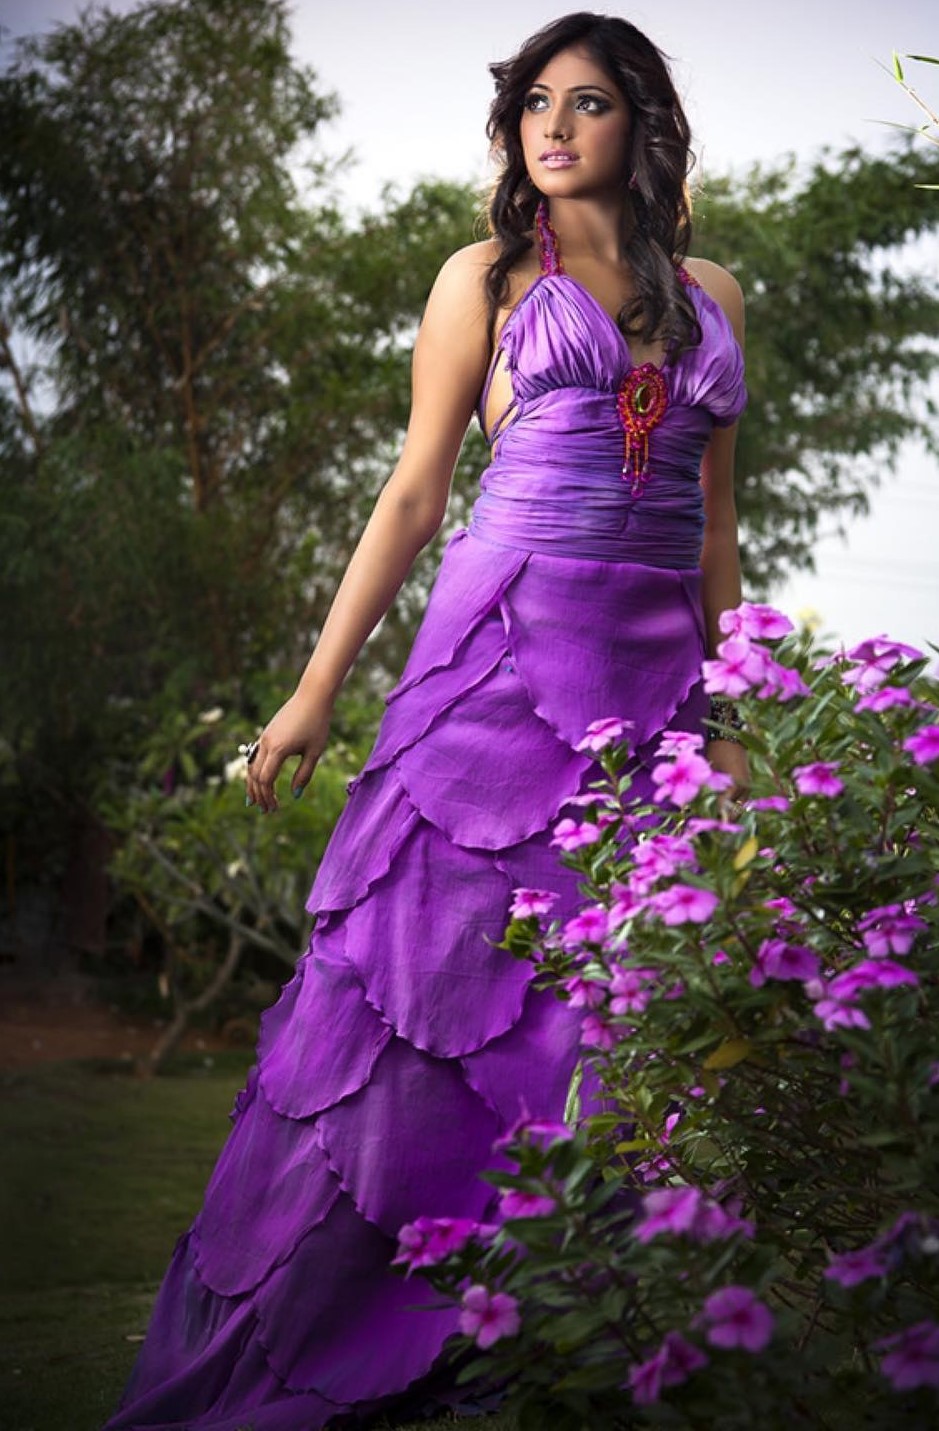 Neer Dose Fame Actress Hariprriya Mesmerising Look In Purple Petal Cut Halter Neck Mermaid Dress Outfits & Fashion